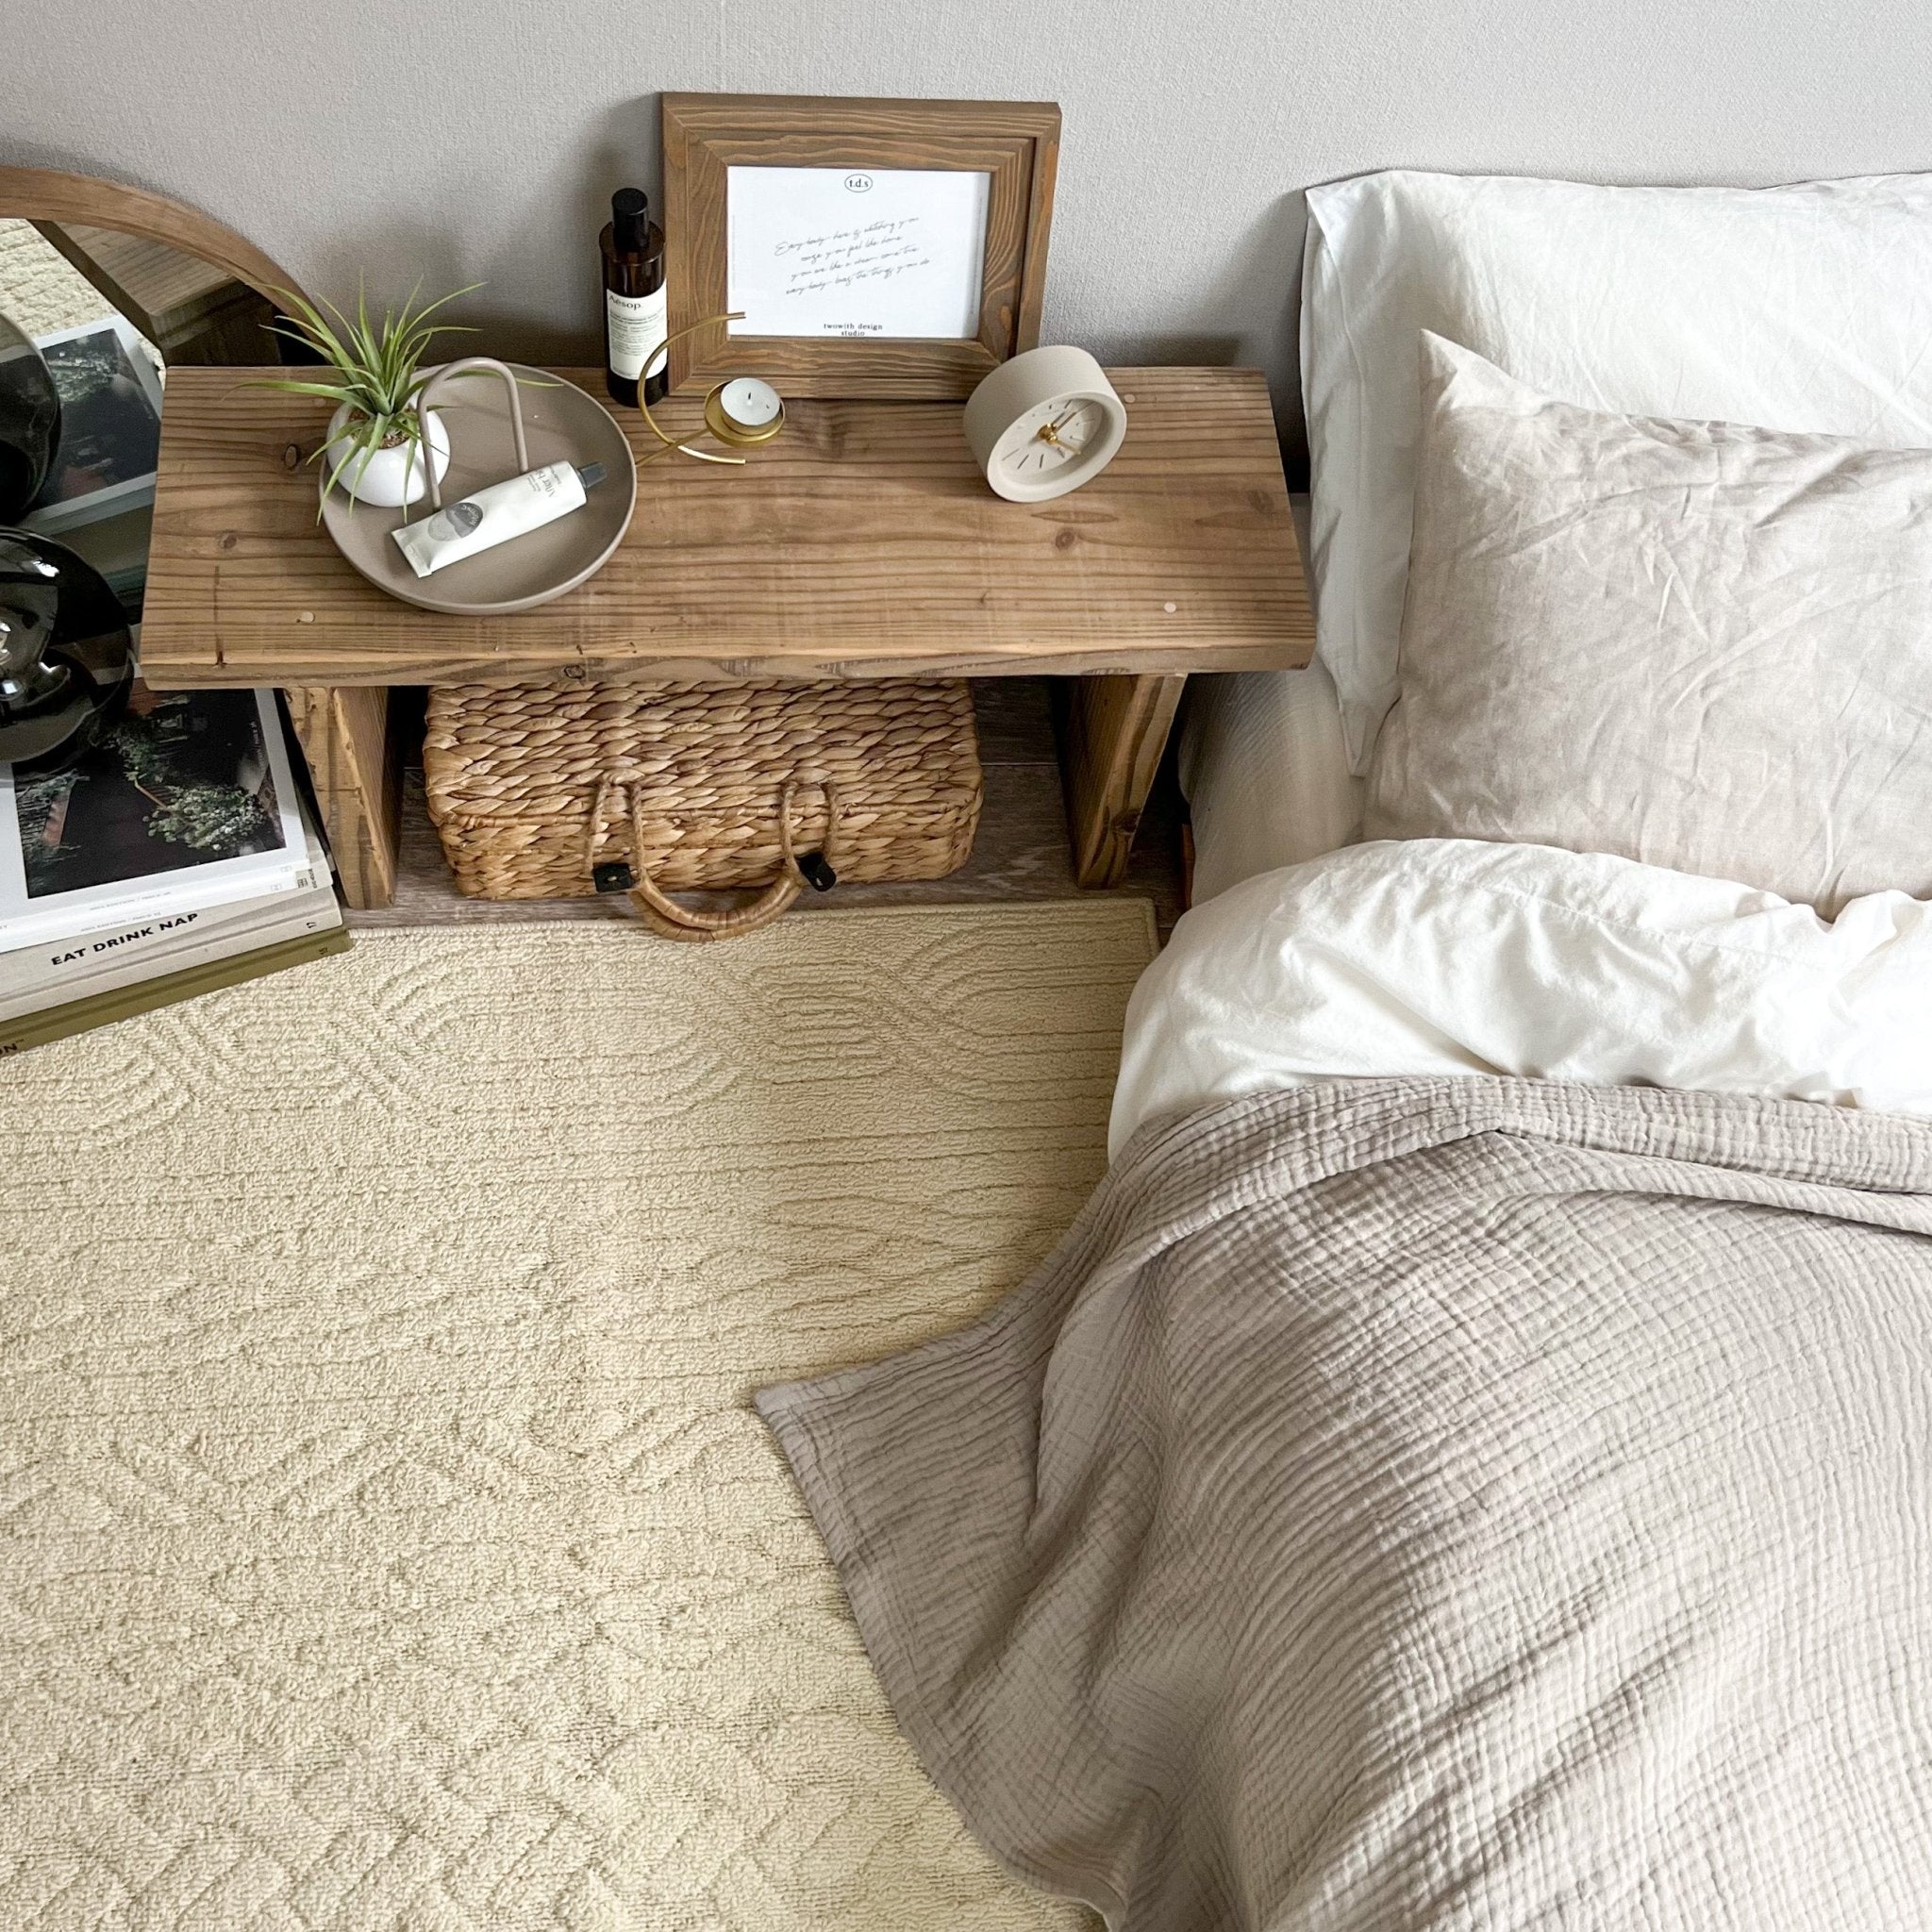 BR-2541-Little Rooms select-洗えるデザインラグ knit tuft rug